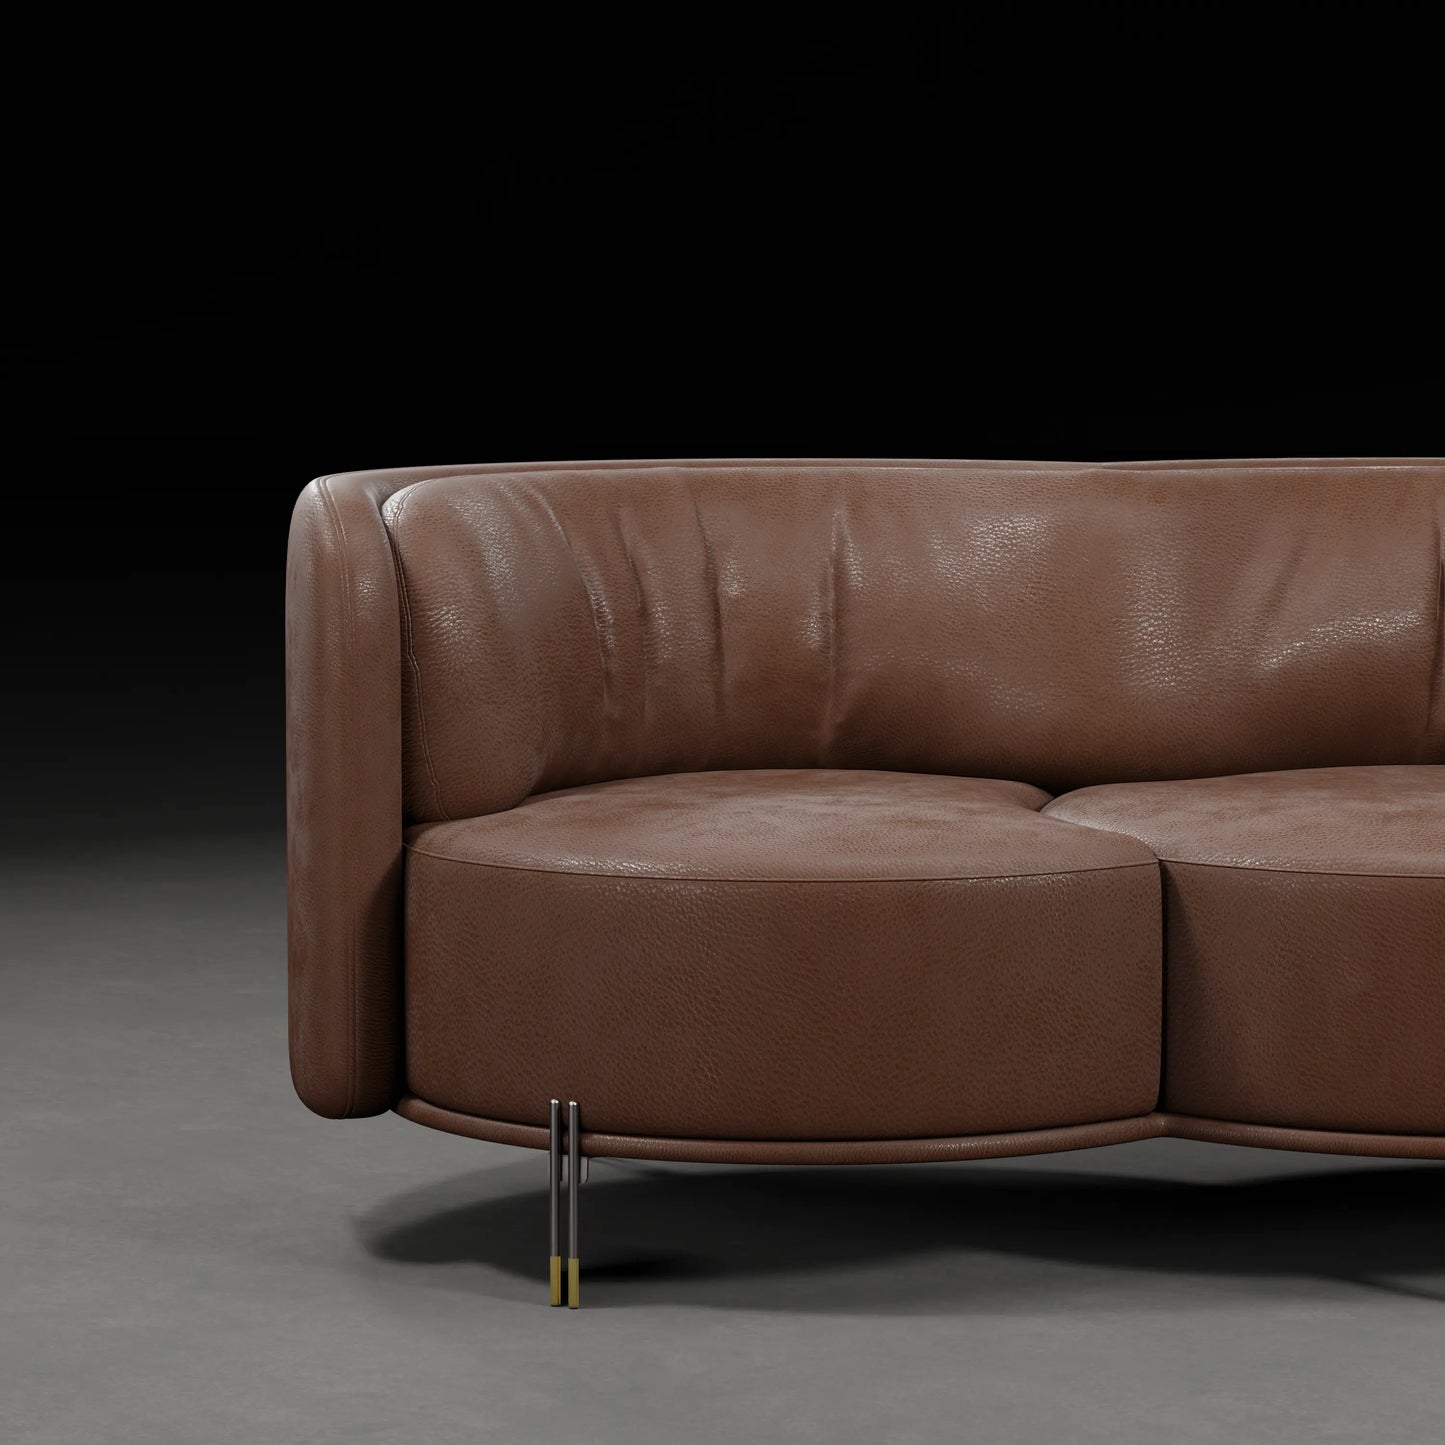 LOTUS -  3 Seater Premium Sofa in Leather Finish | Brown Colour